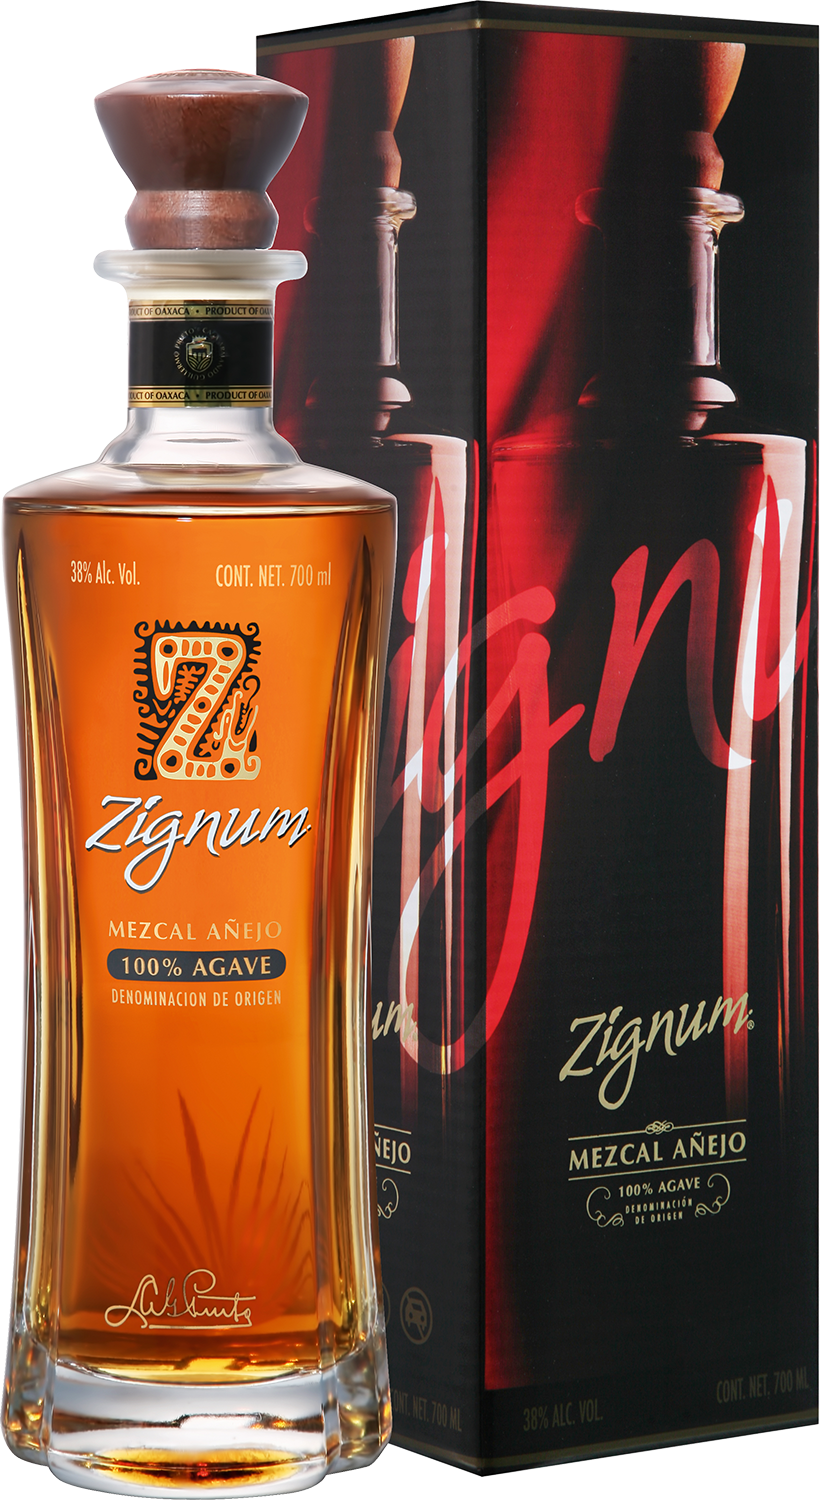 Zignum, Mezcal Anejo, gift box